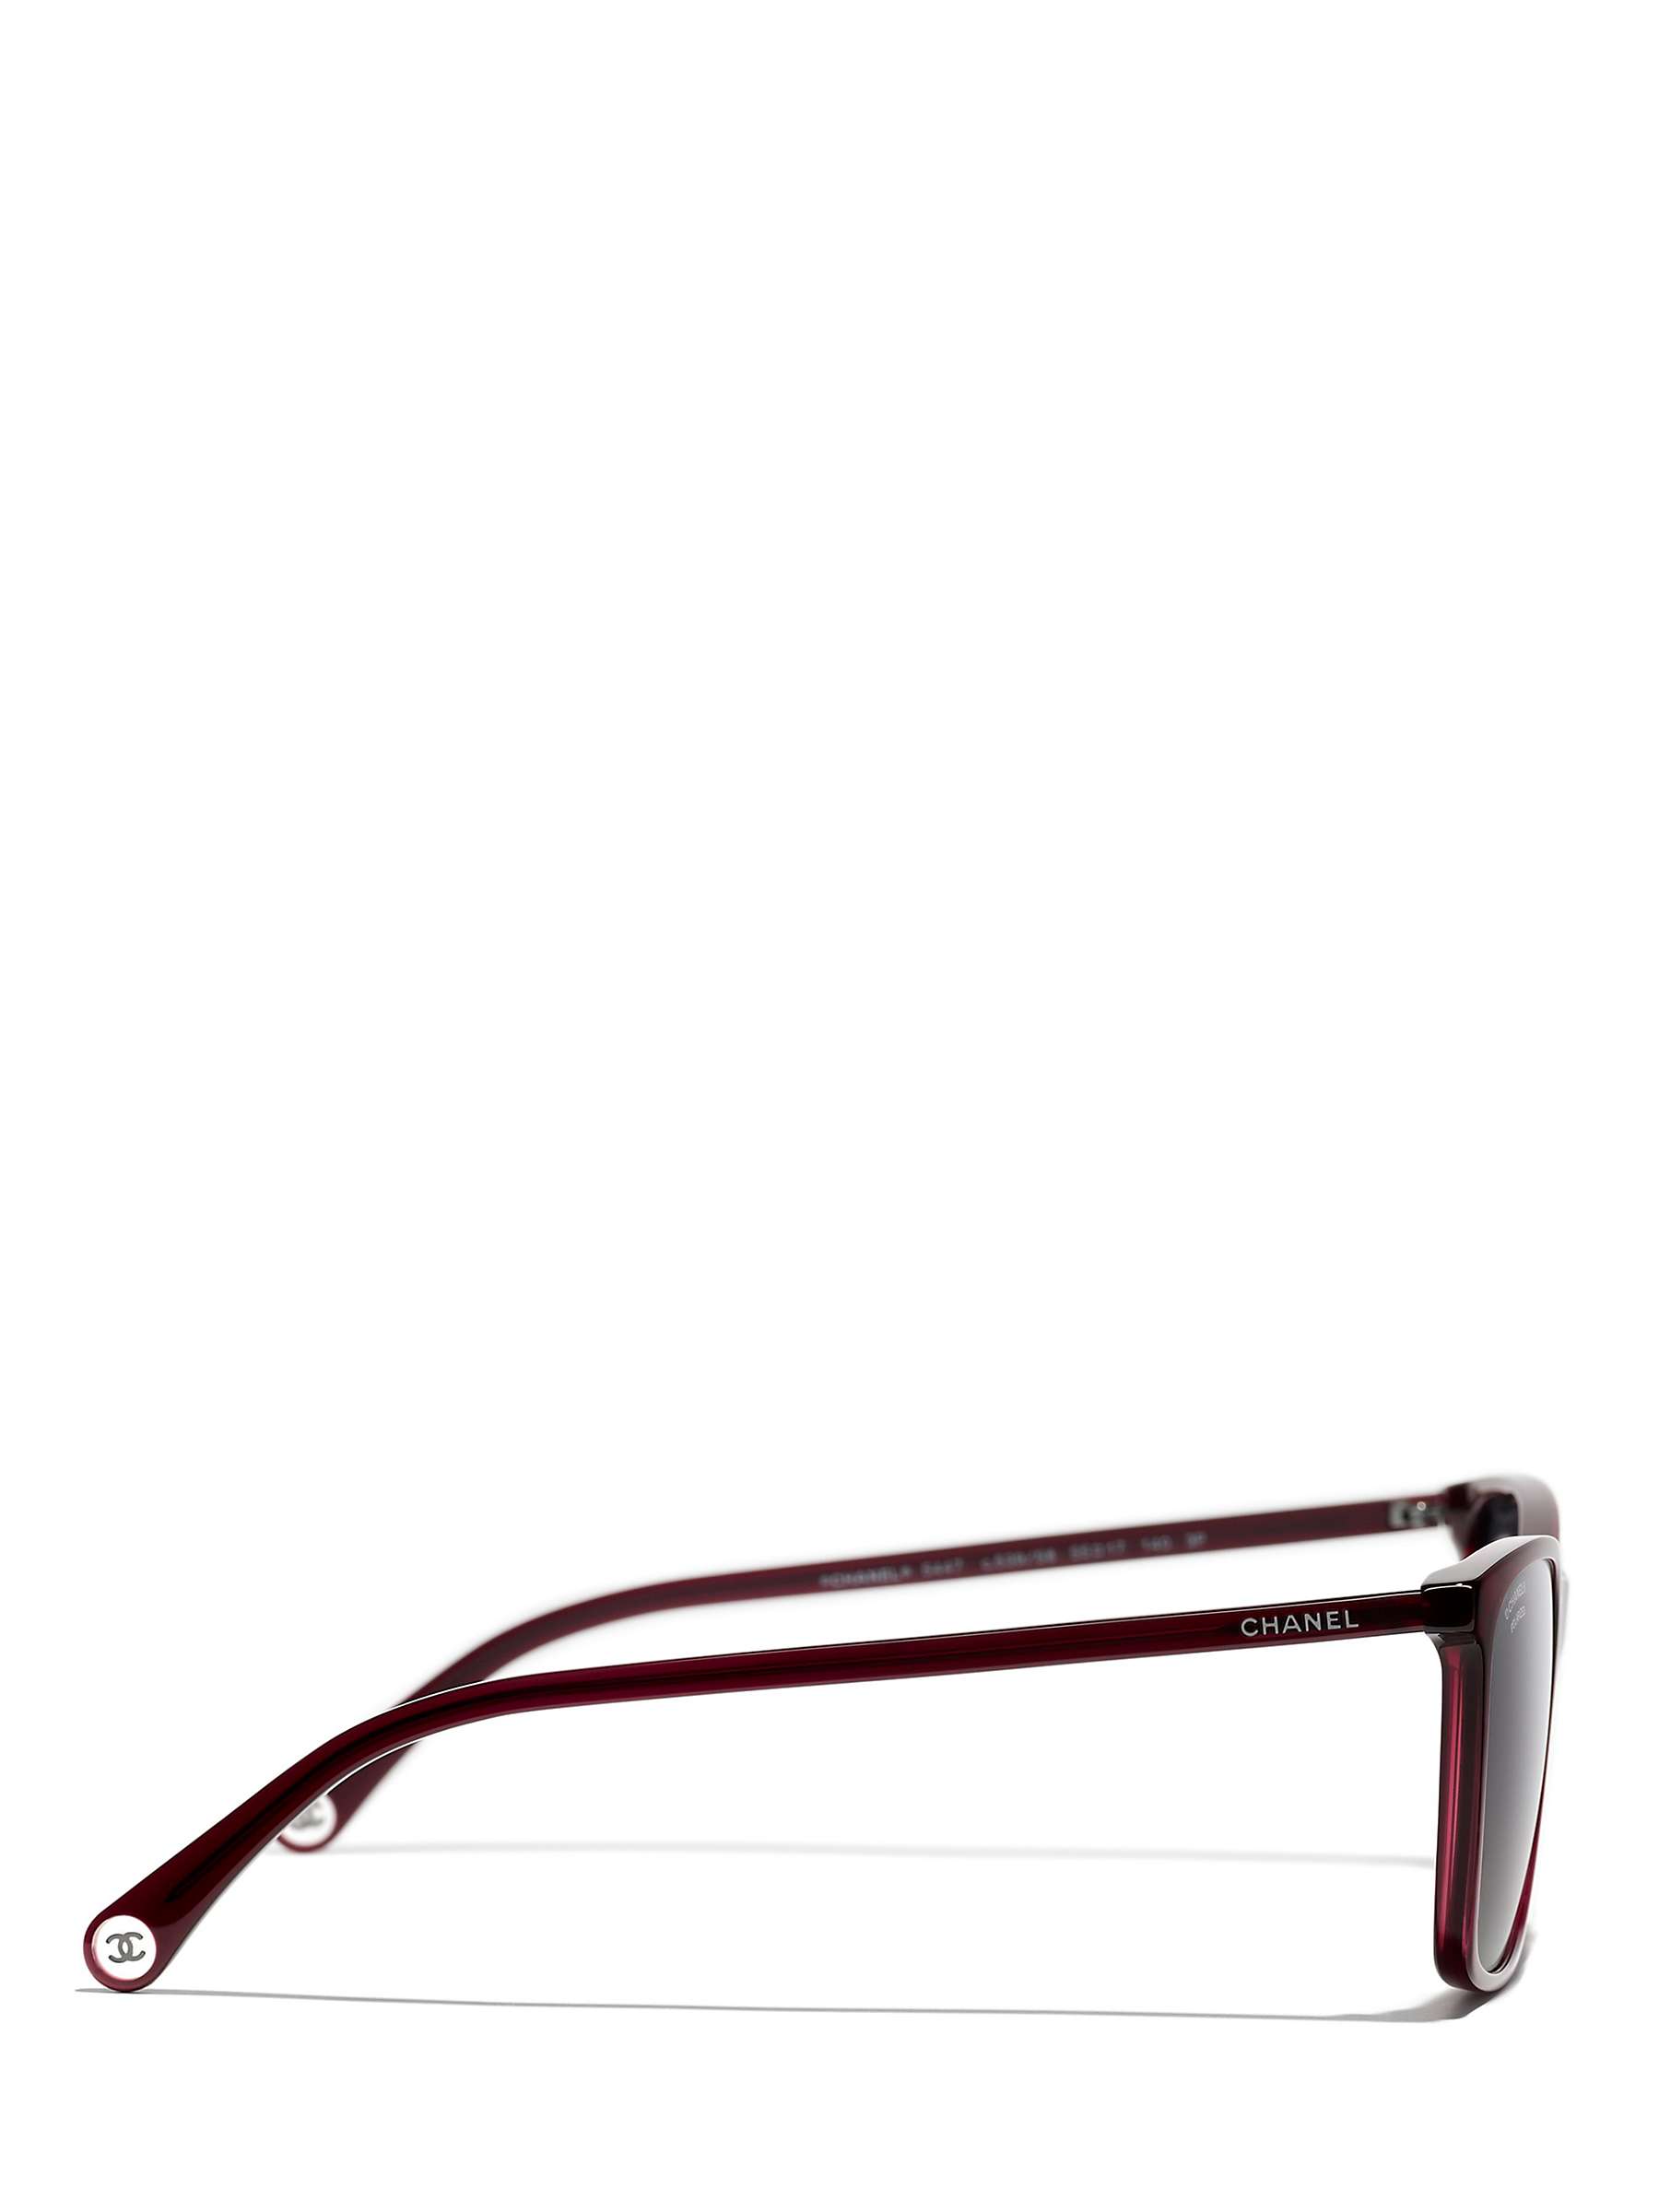 Buy CHANEL Rectangular Sunglasses CH5447 Dark Red/Grey Gradient Online at johnlewis.com